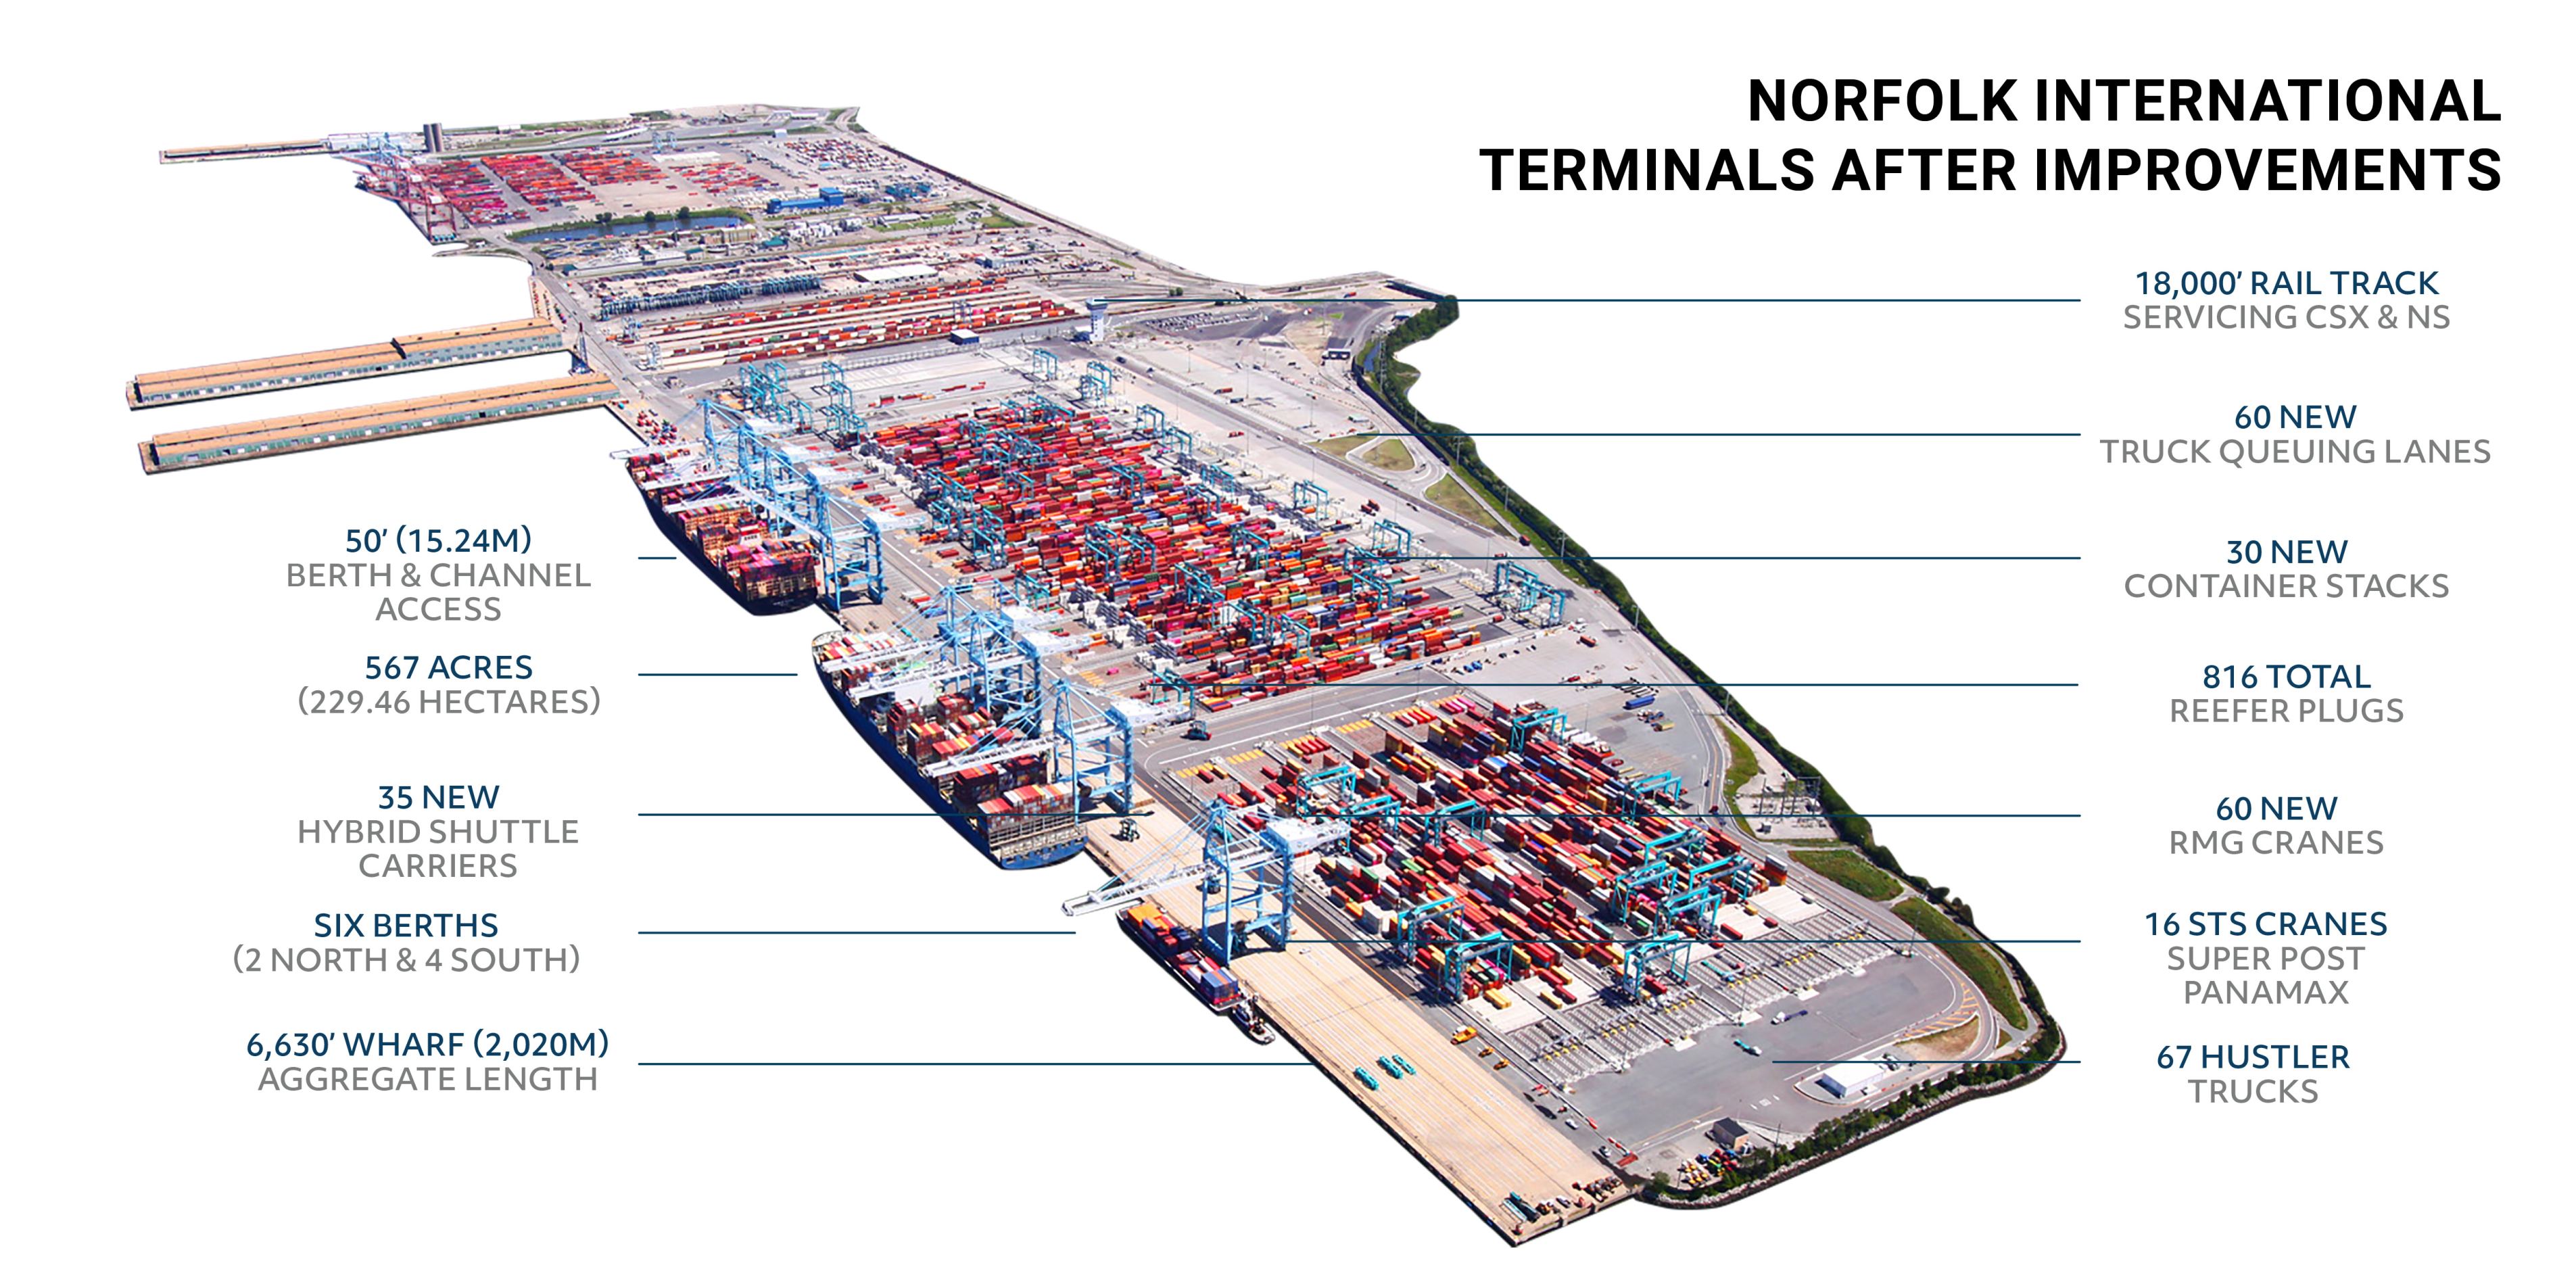 Norfolk International Terminals After Improvements